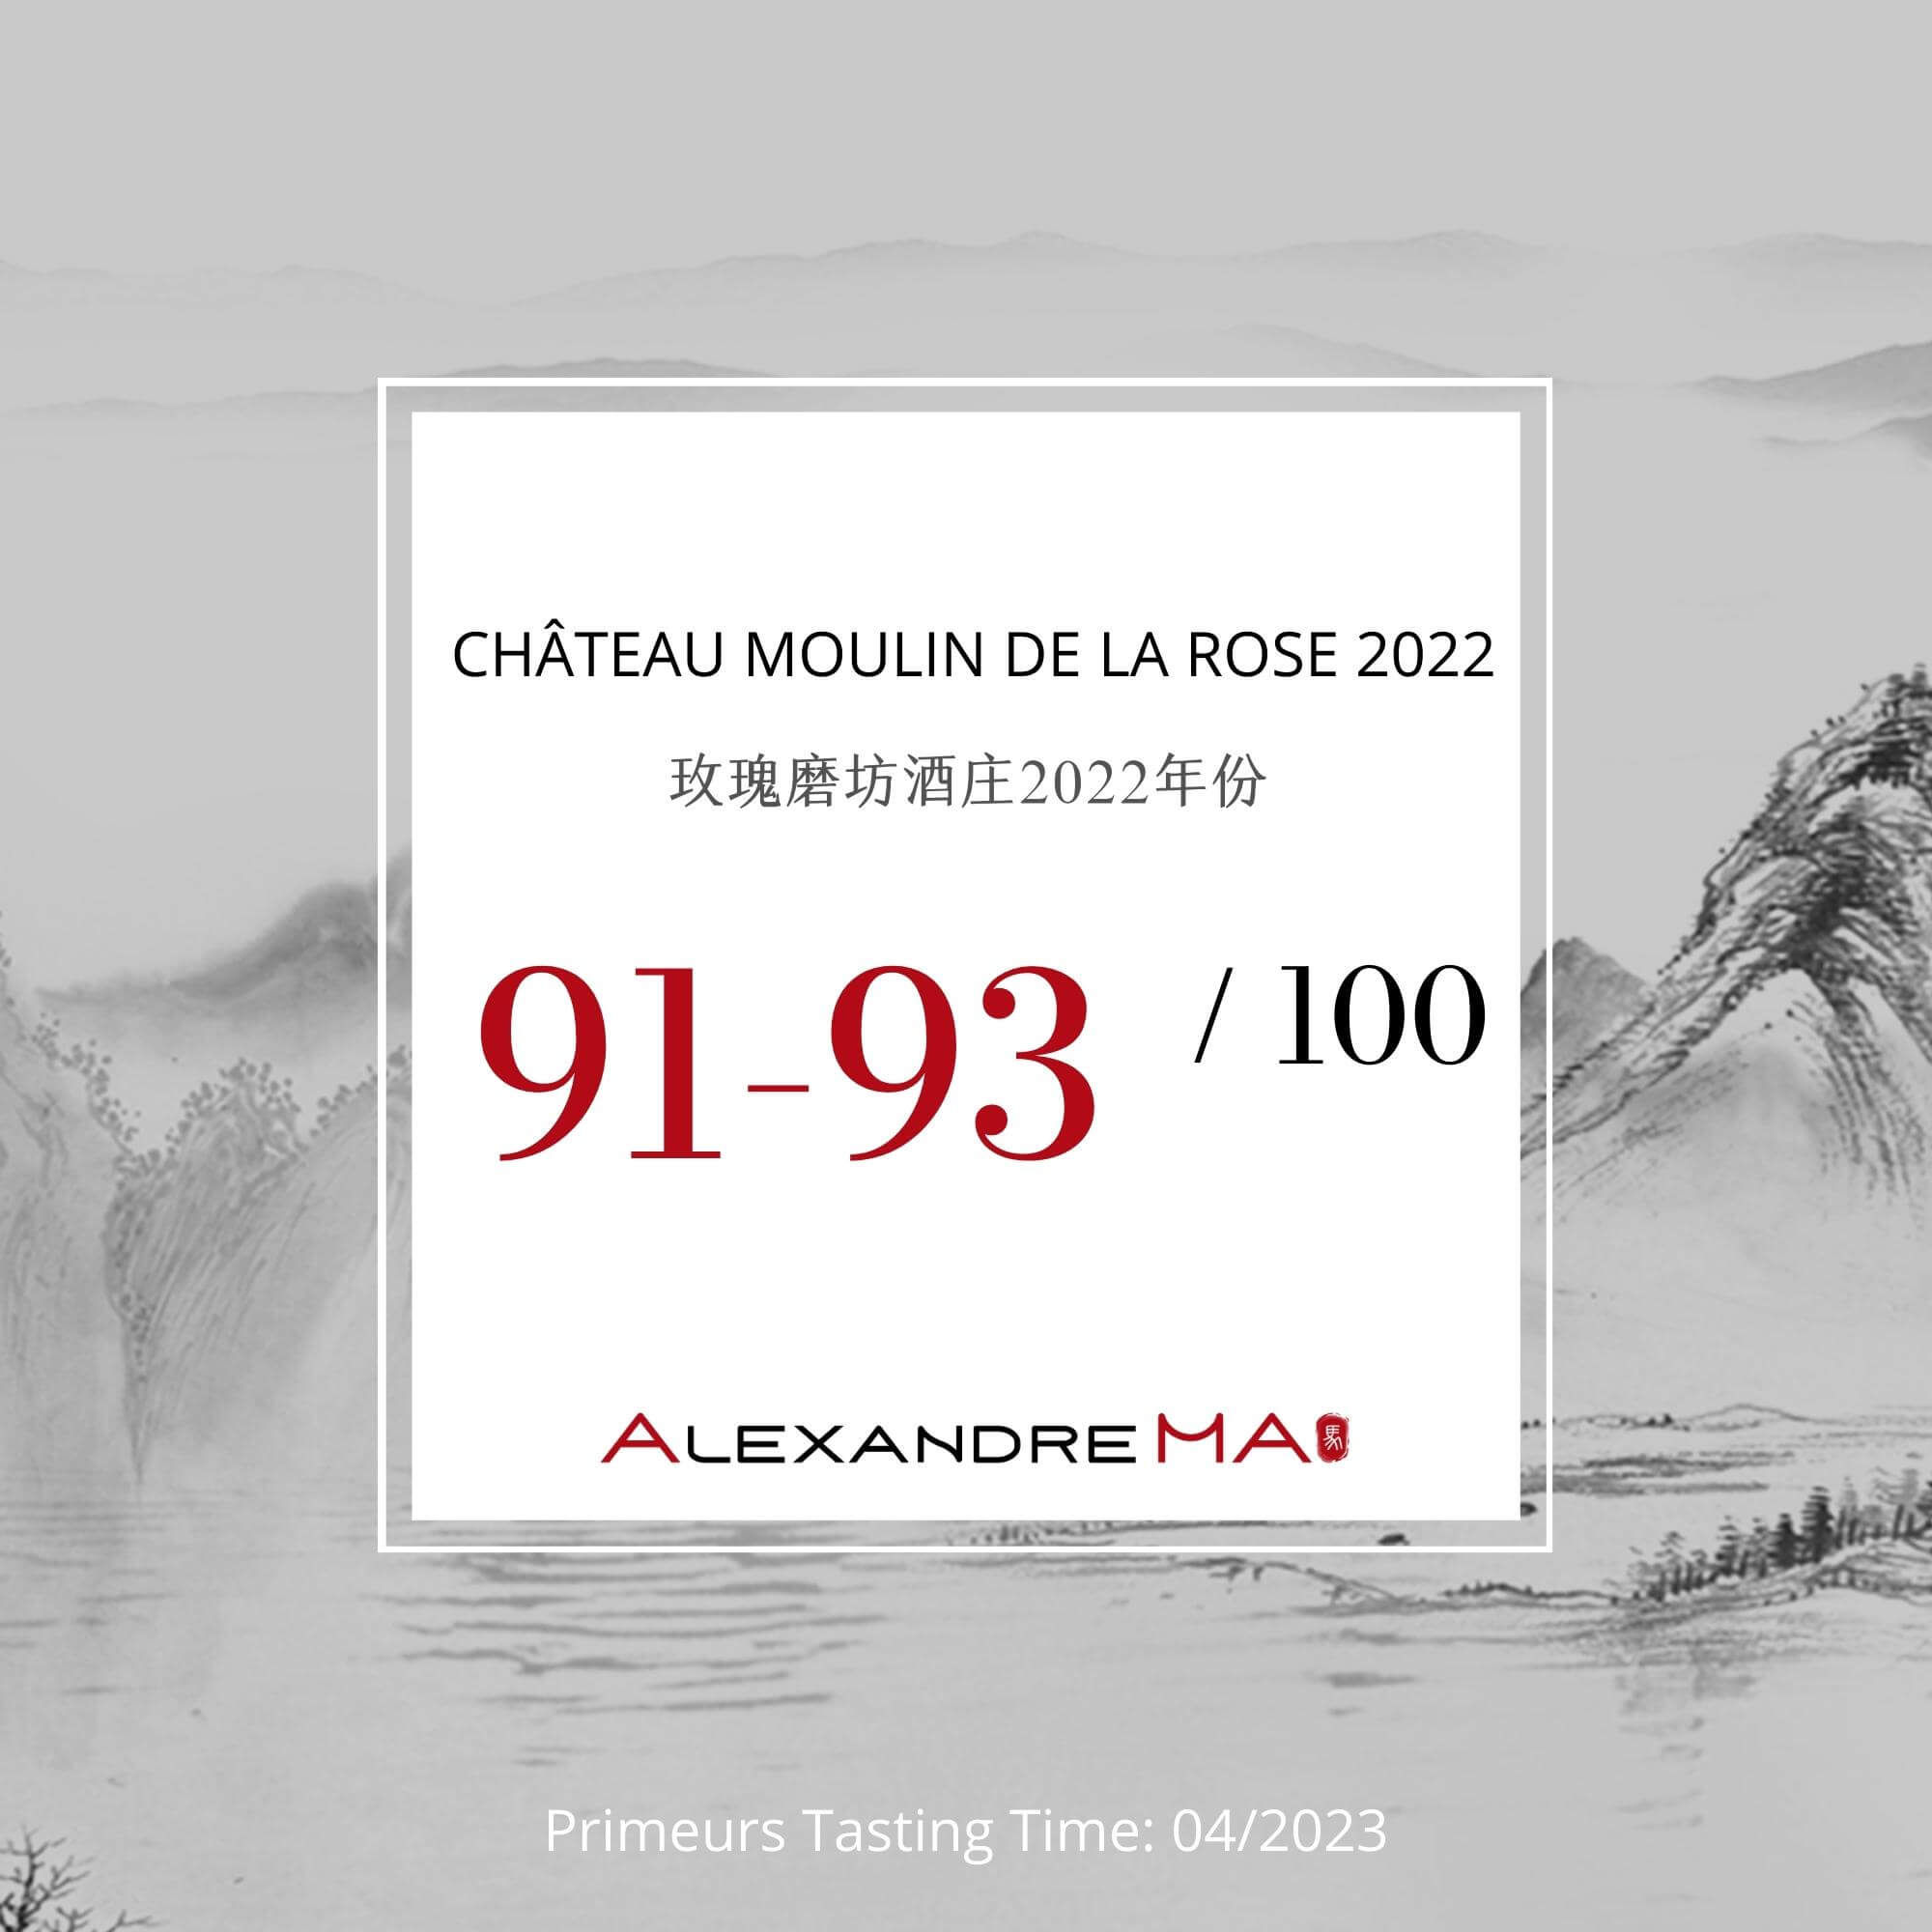 Château Moulin de La Rose 2022 Primeurs - Alexandre MA